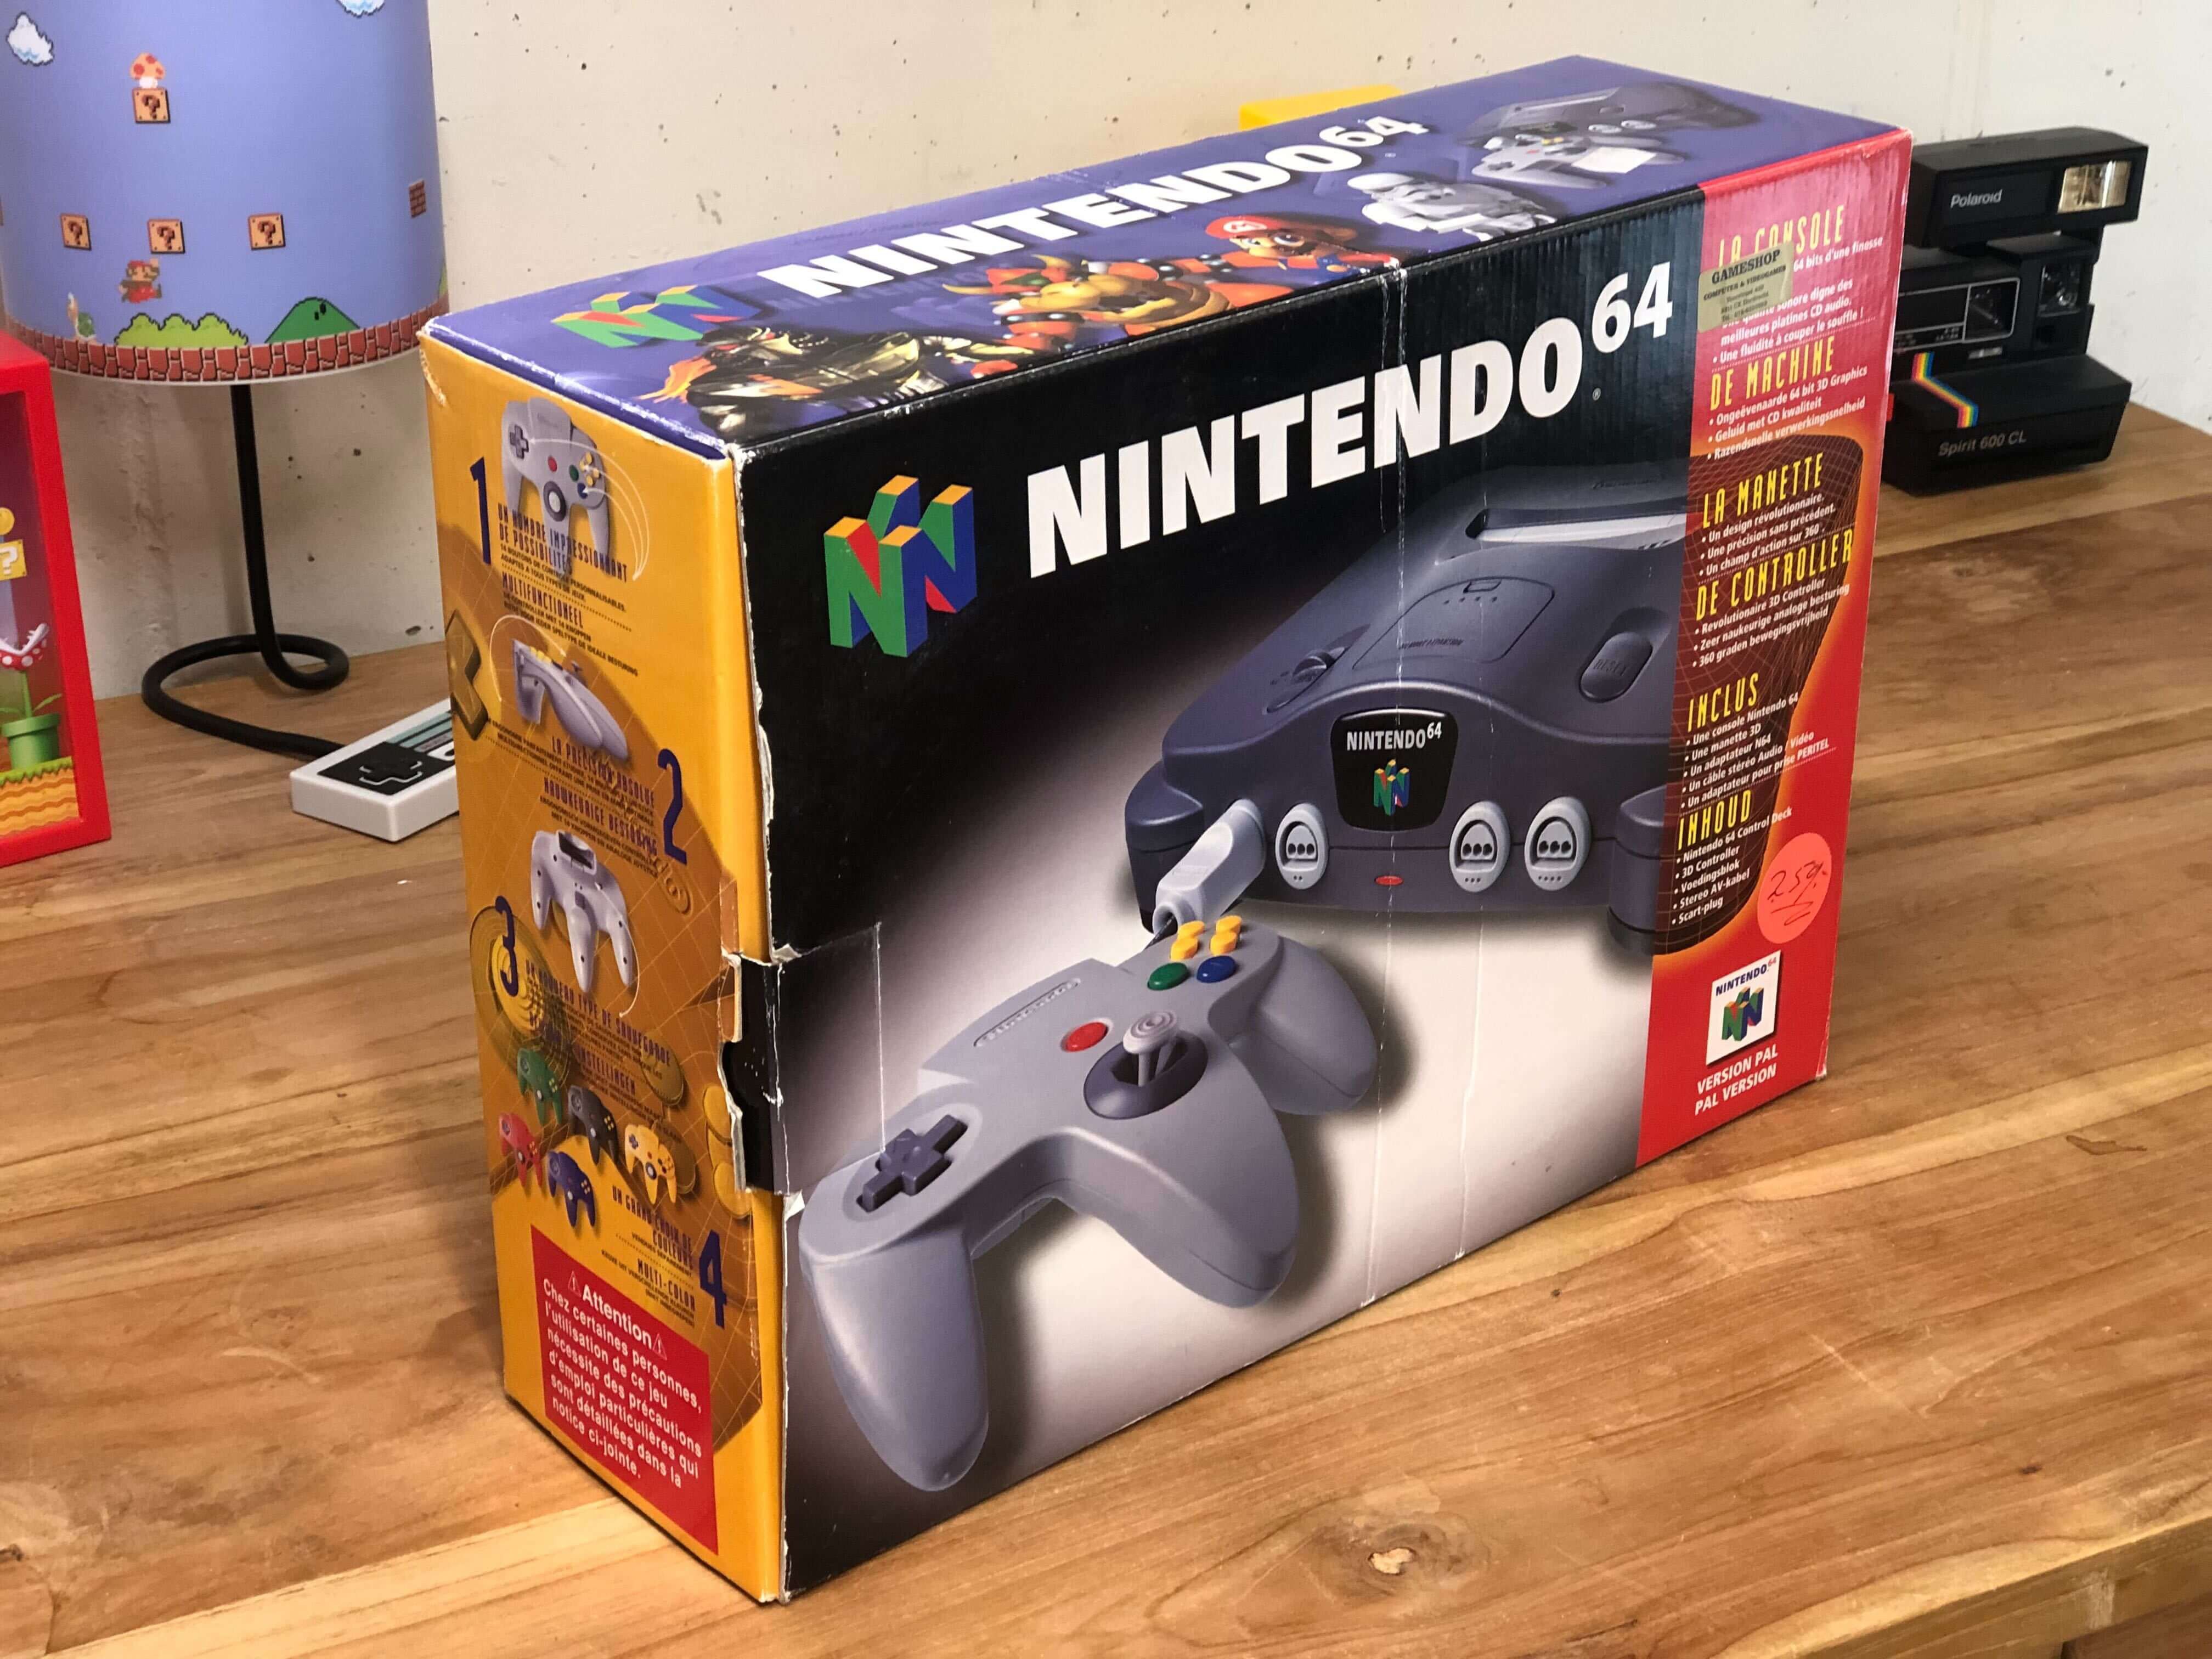 Nintendo 64 Console [Complete] - Nintendo 64 Hardware - 4